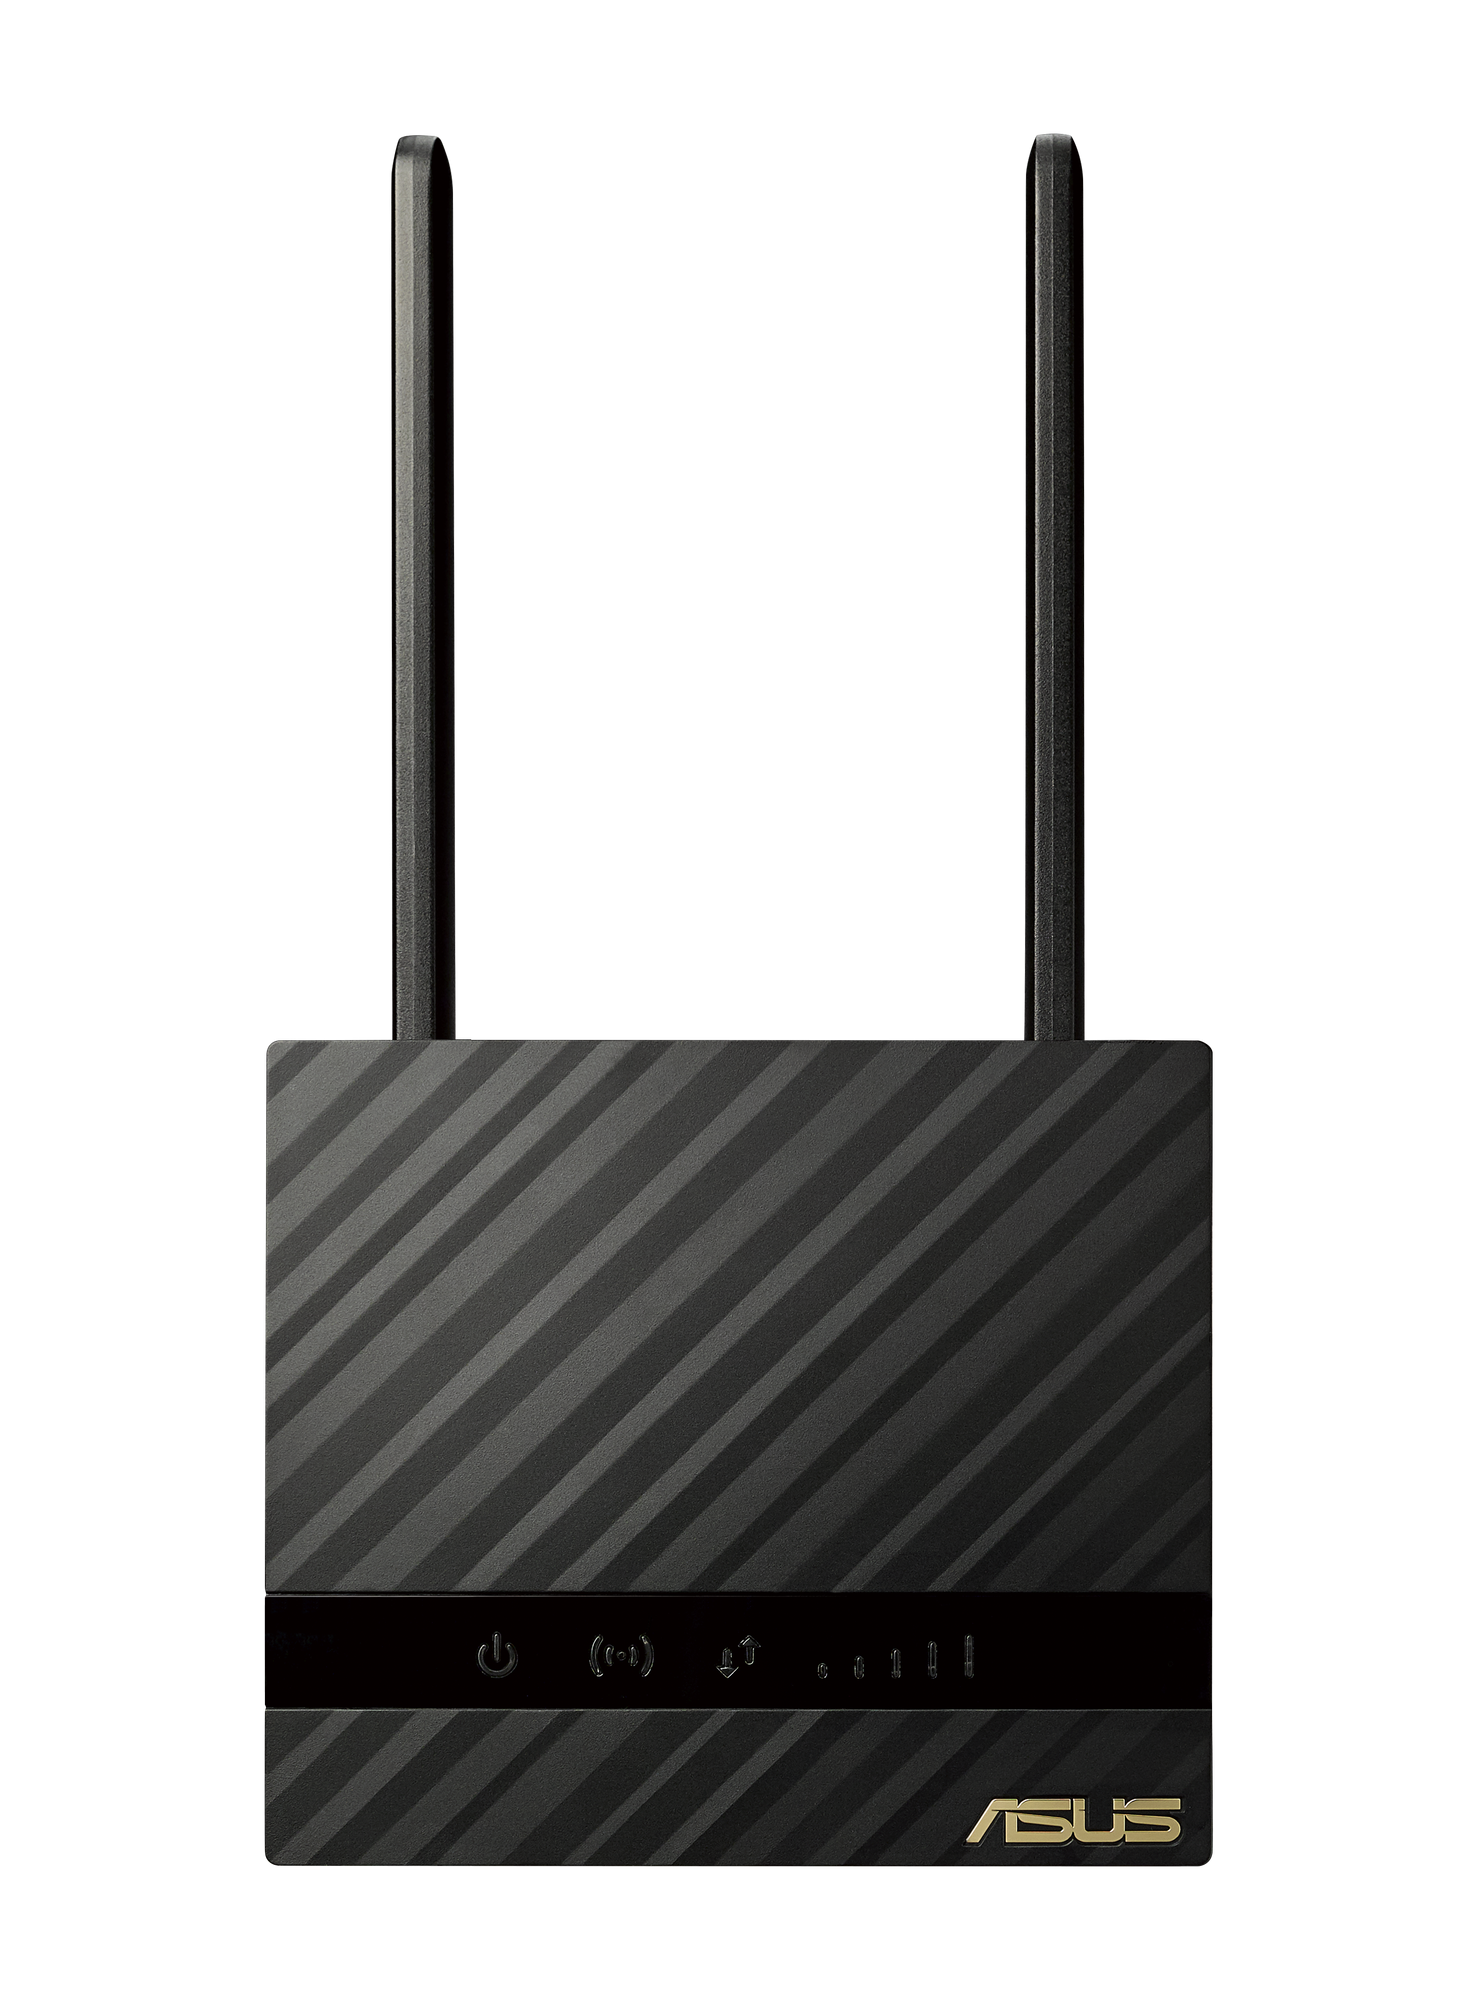 ASUS 4G-N16 N300 LTE WLAN-Router 1